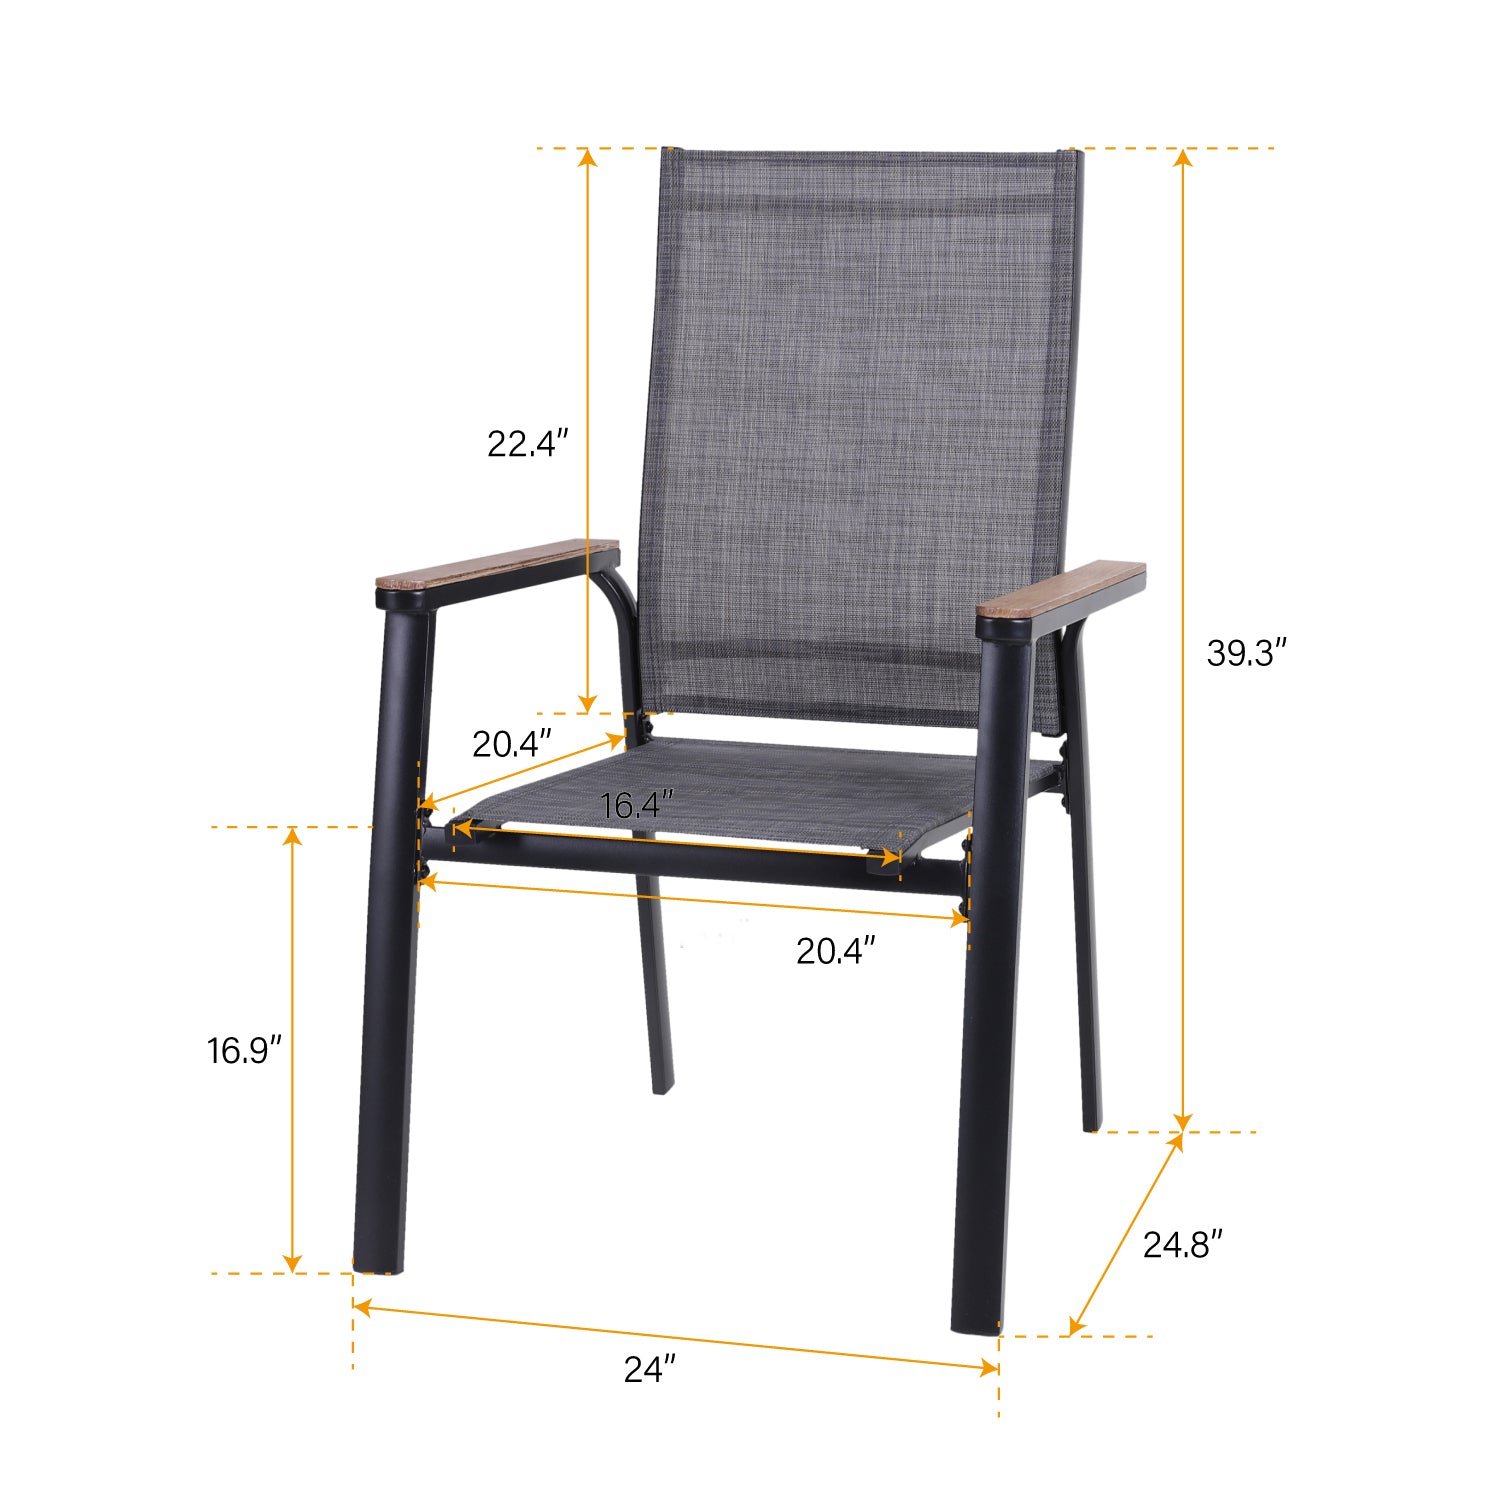 PHI VILLA Textilene Patio Dining Chairs, Set of 2